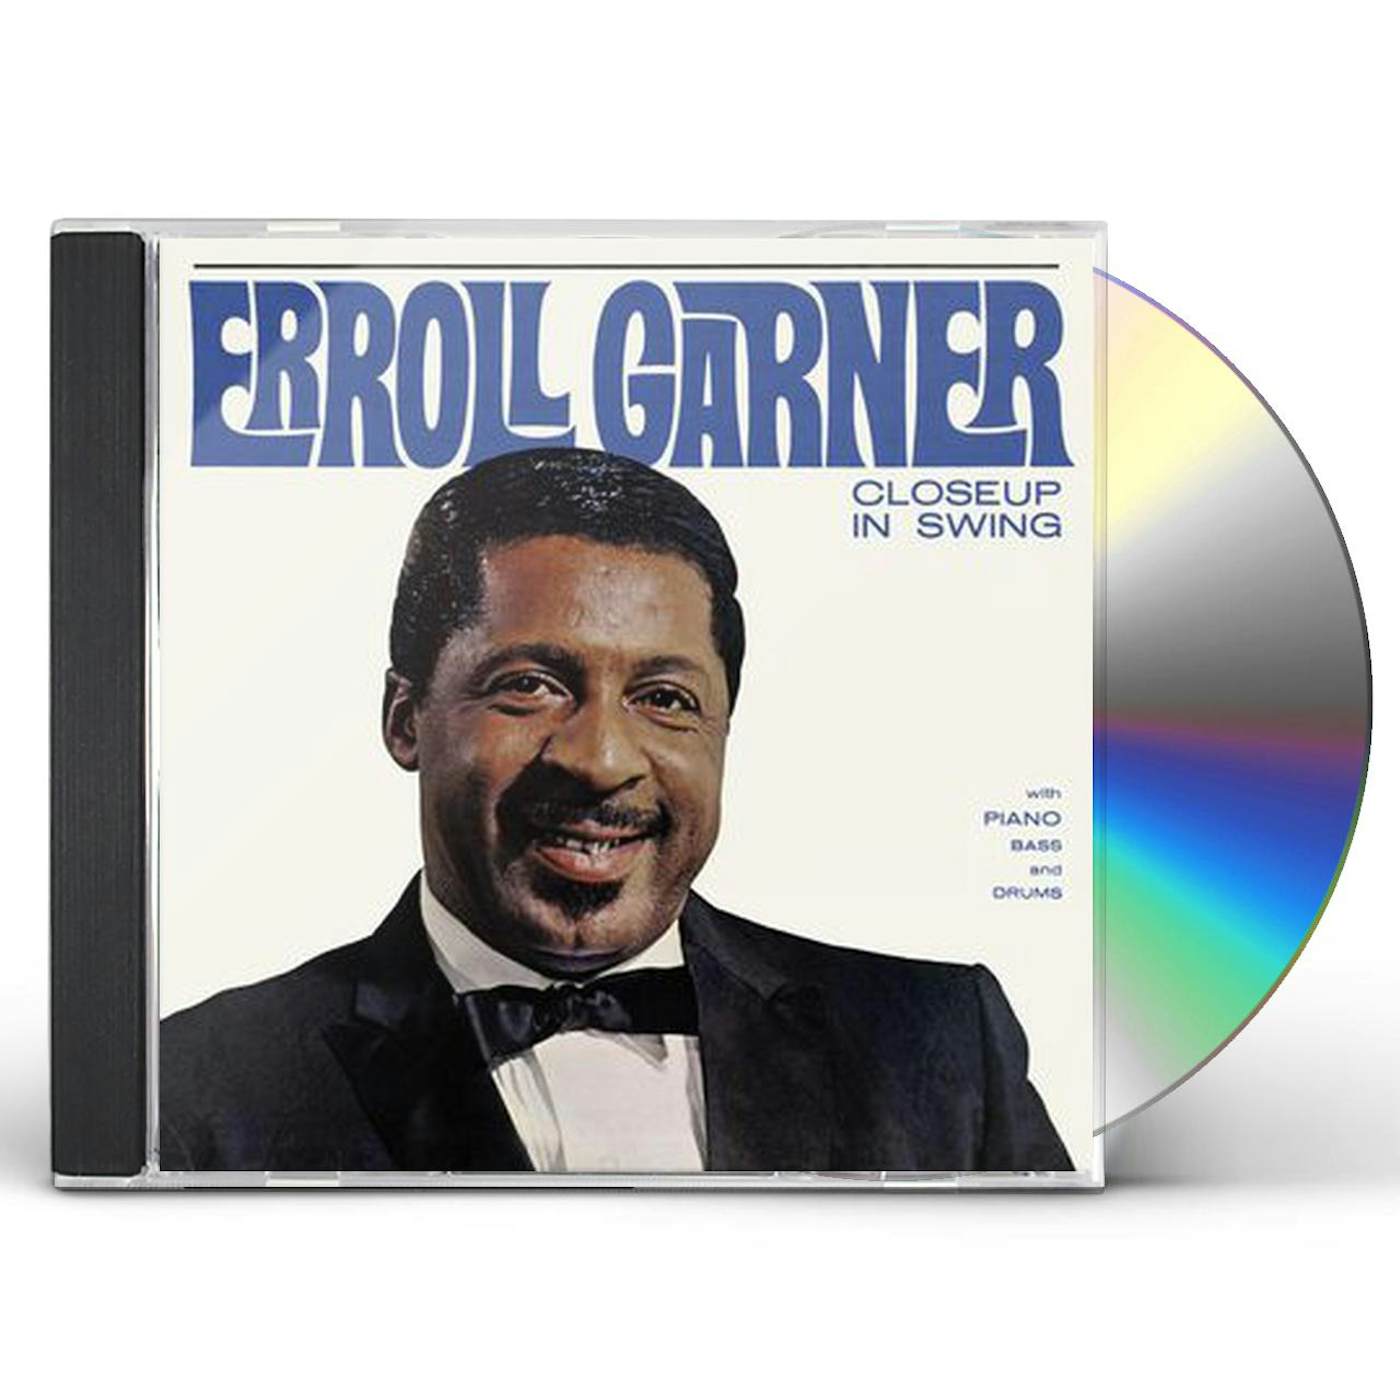 Erroll Garner CLOSEUP IN SWING (OCTAVE REMASTERED SERIES) CD